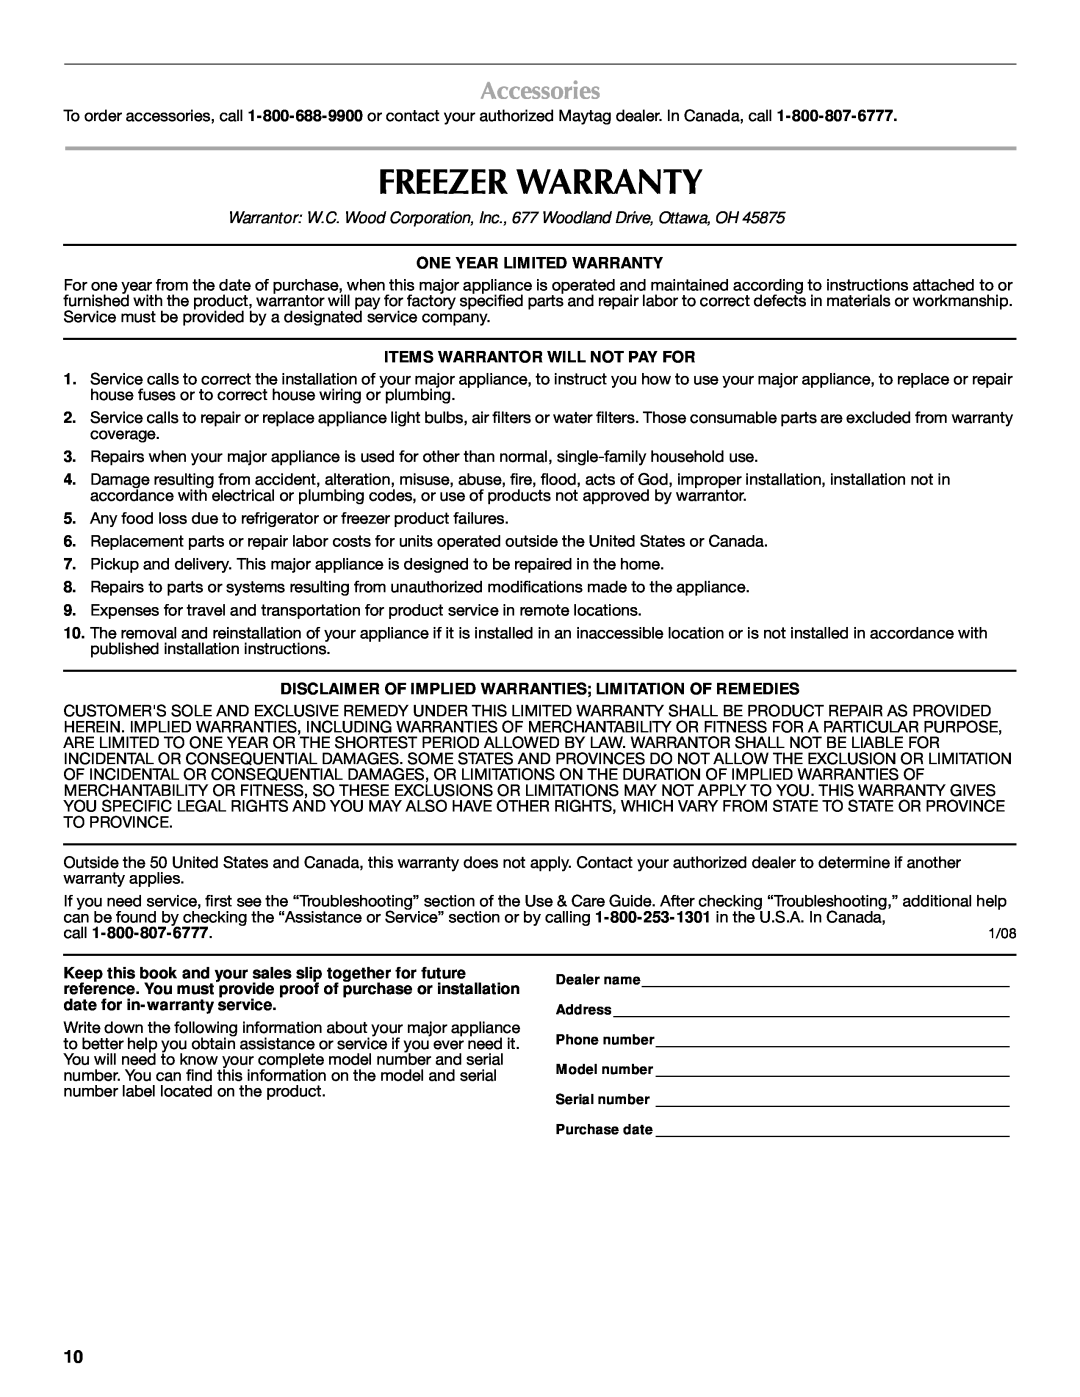 Maytag 1-82180-002 Freezer Warranty, Accessories, Warrantor W.C. Wood Corporation, Inc., 677 Woodland Drive, Ottawa, OH 